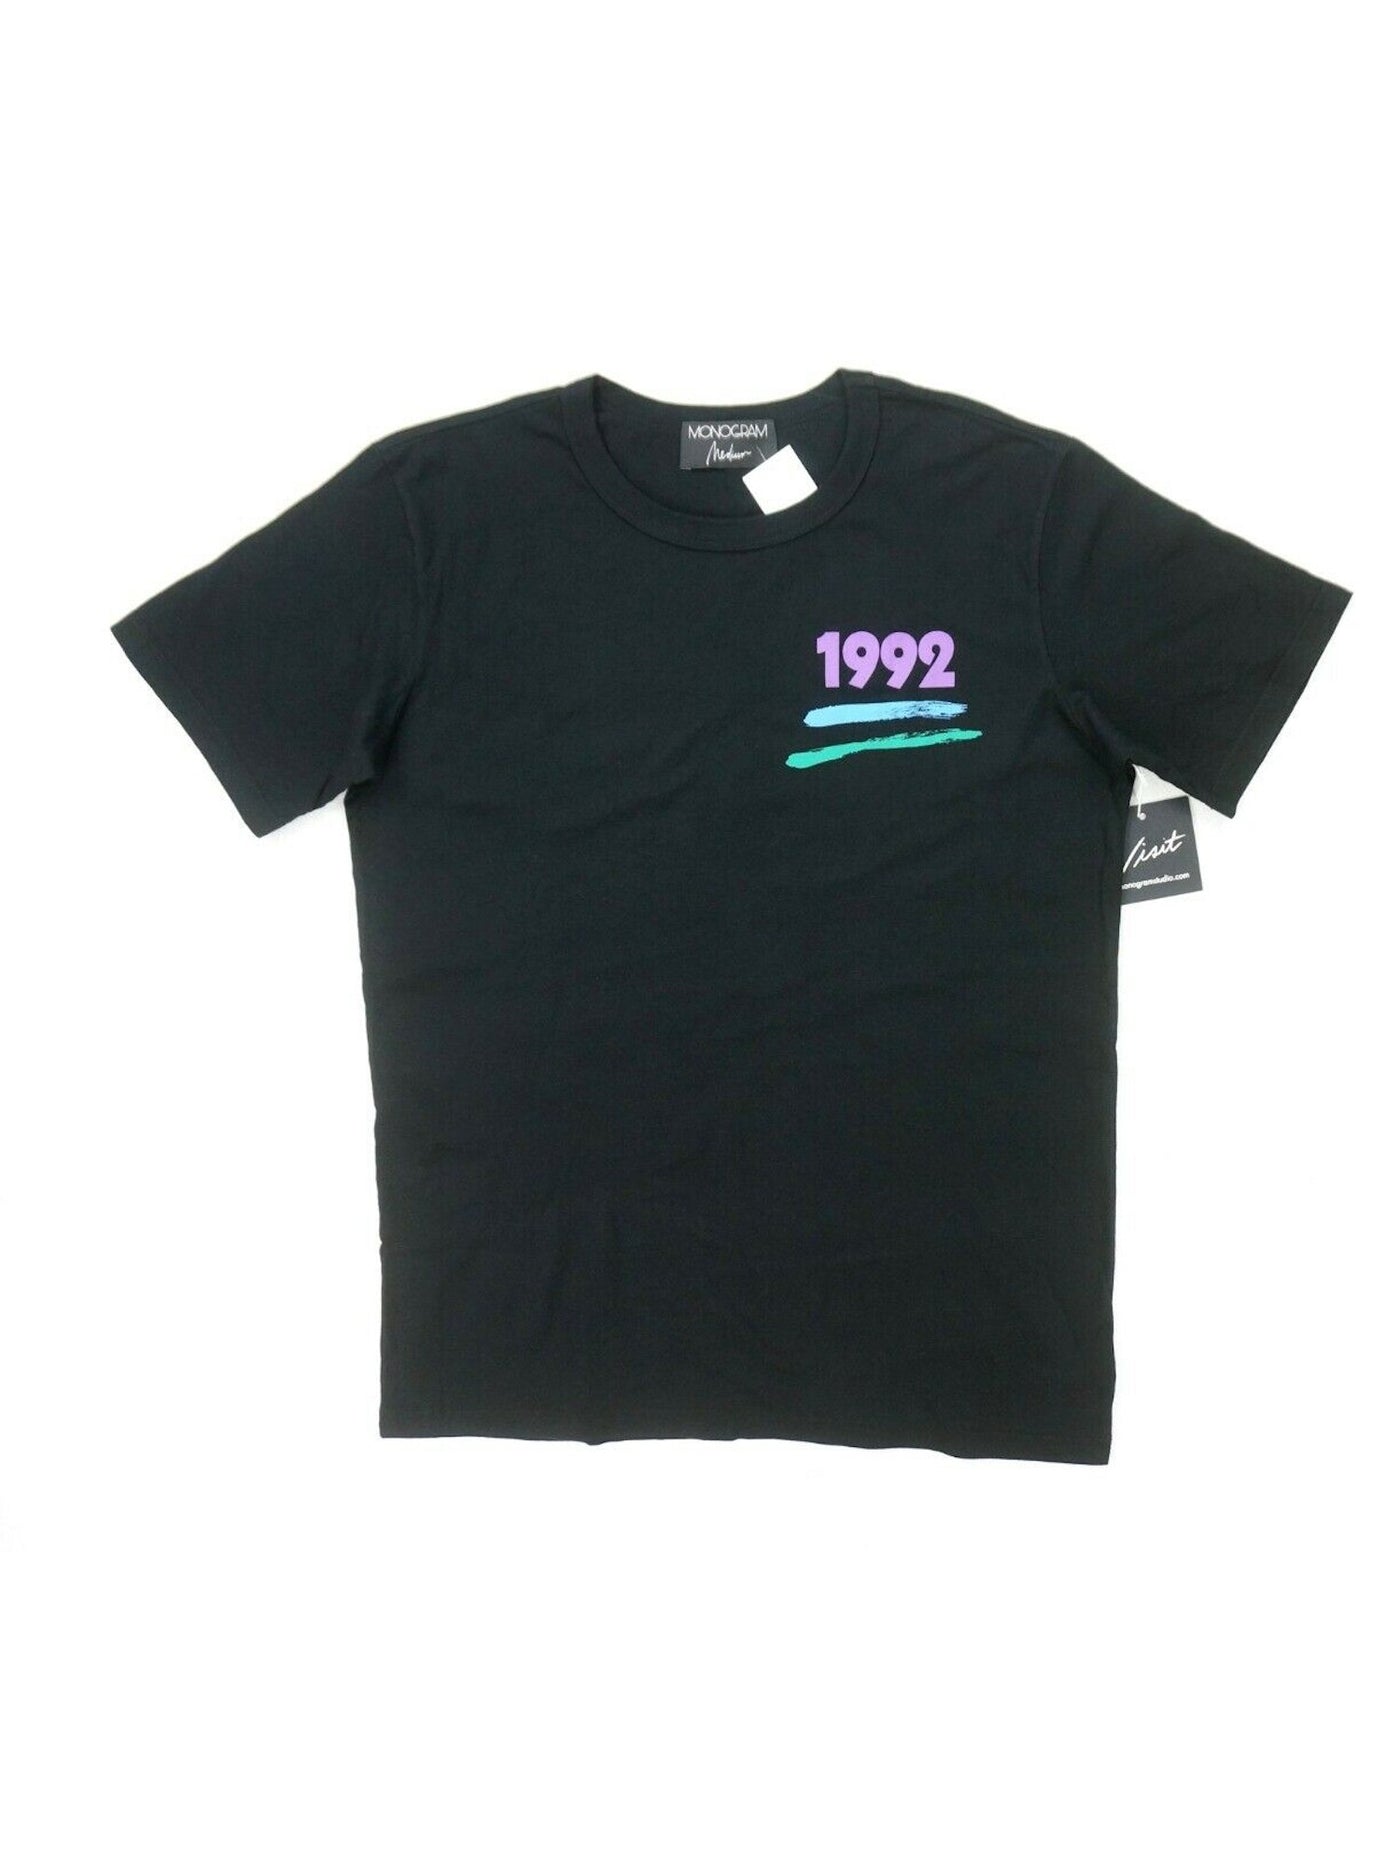 MONOGRAM Mens Black Lightweight, Graphic Short Sleeve Classic Fit T-Shirt XL